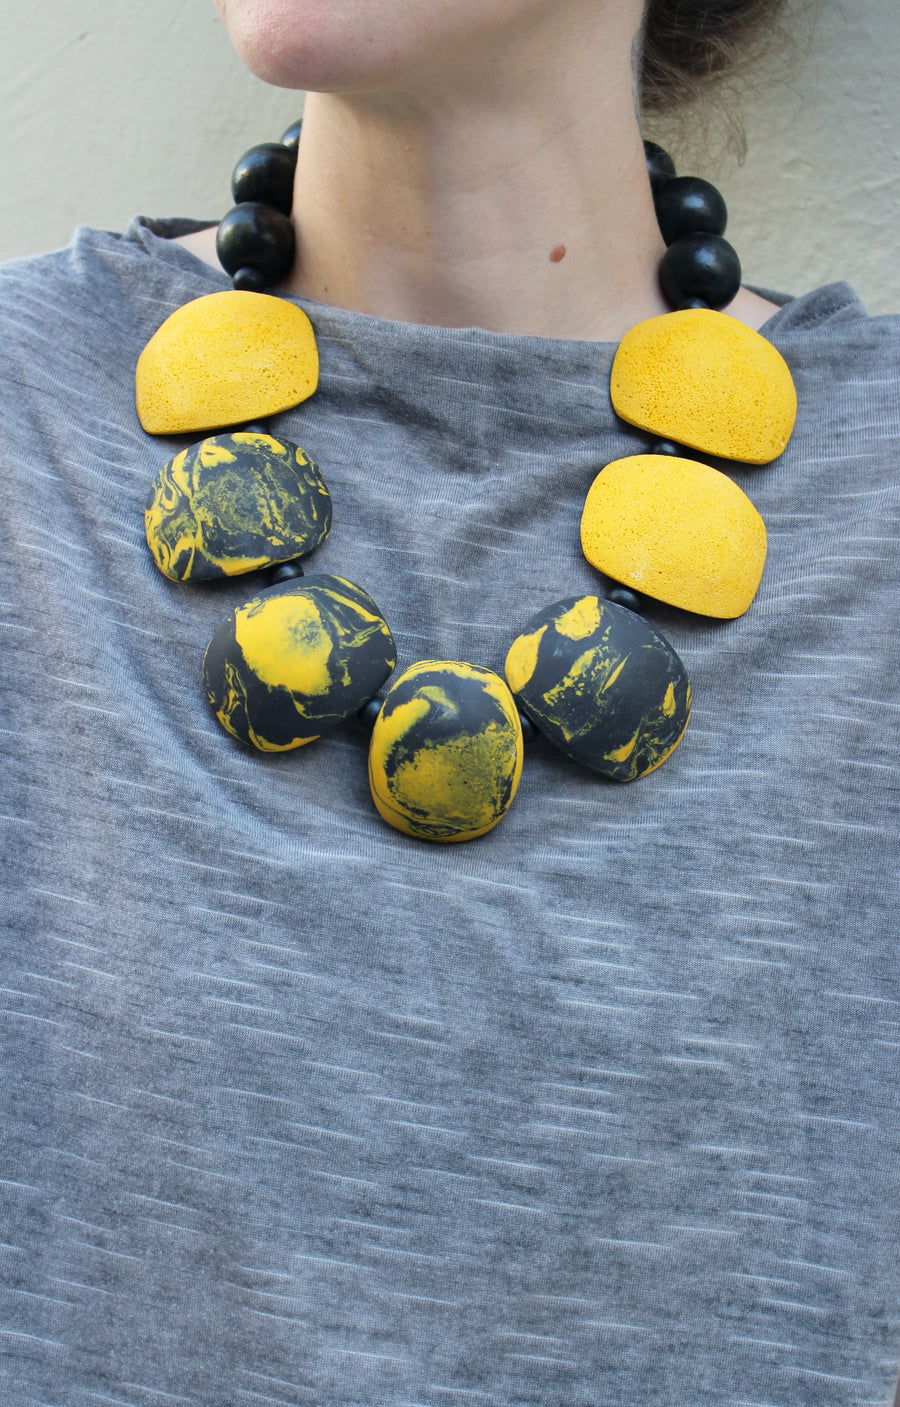 Maya necklace / Yellow and black